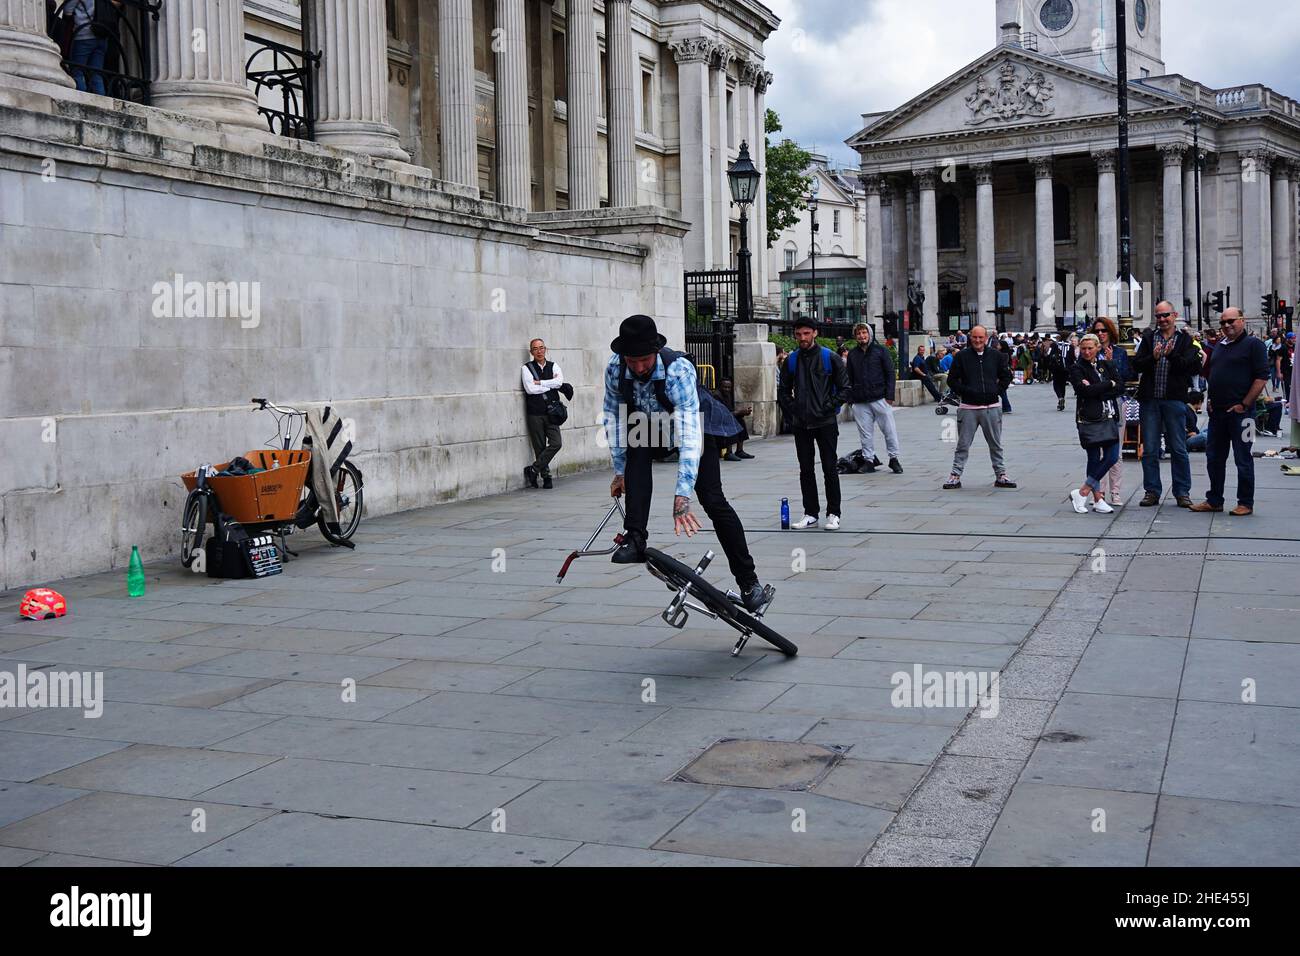 Street performer in Trafalgar Square, Central London, England. Stock Photo